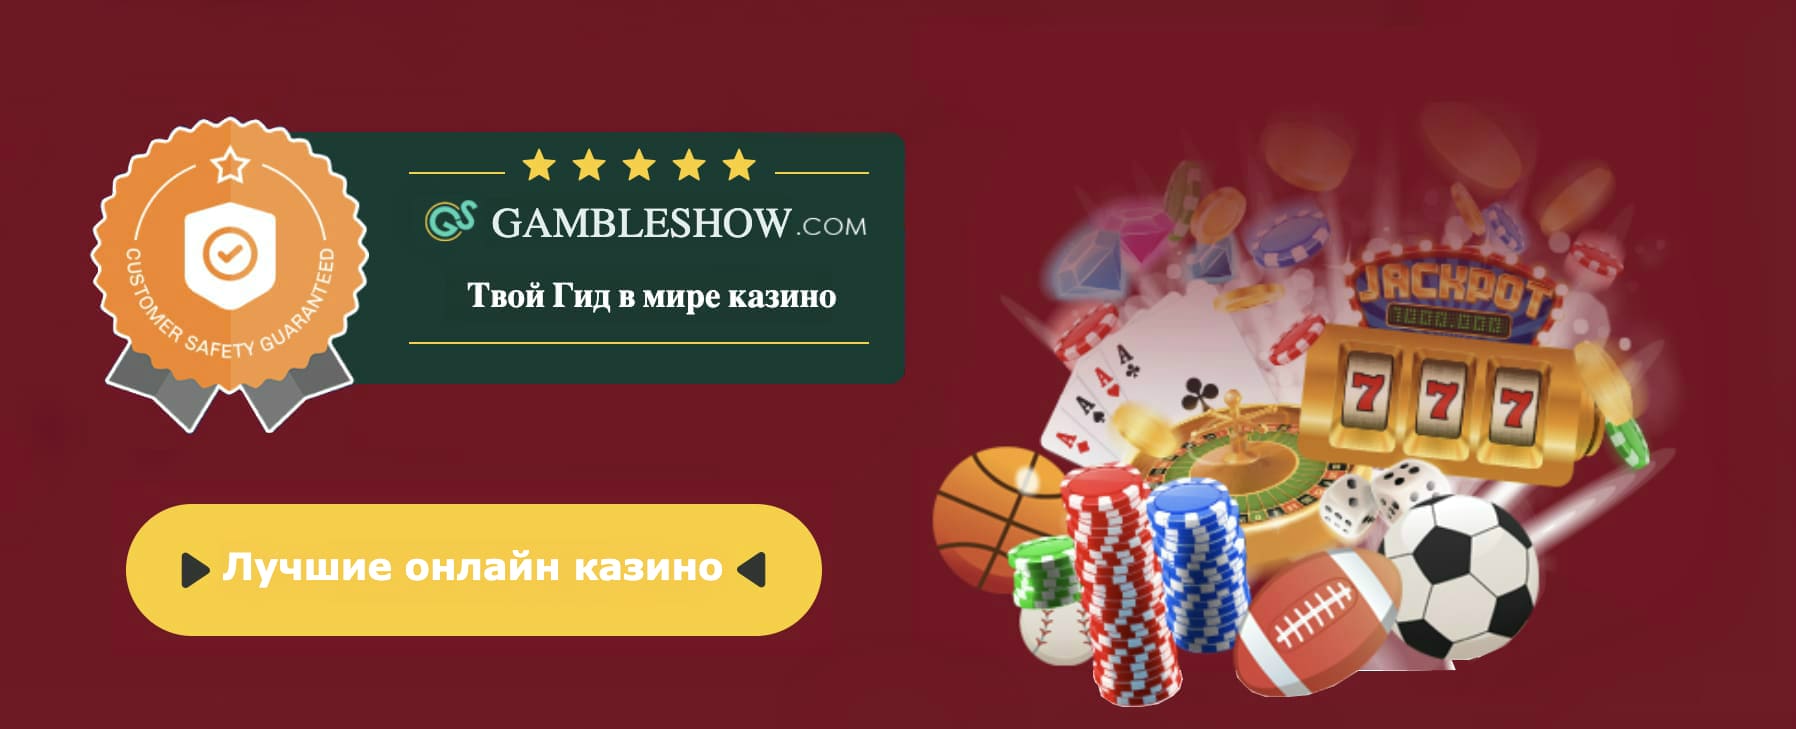 Jackpot casino community